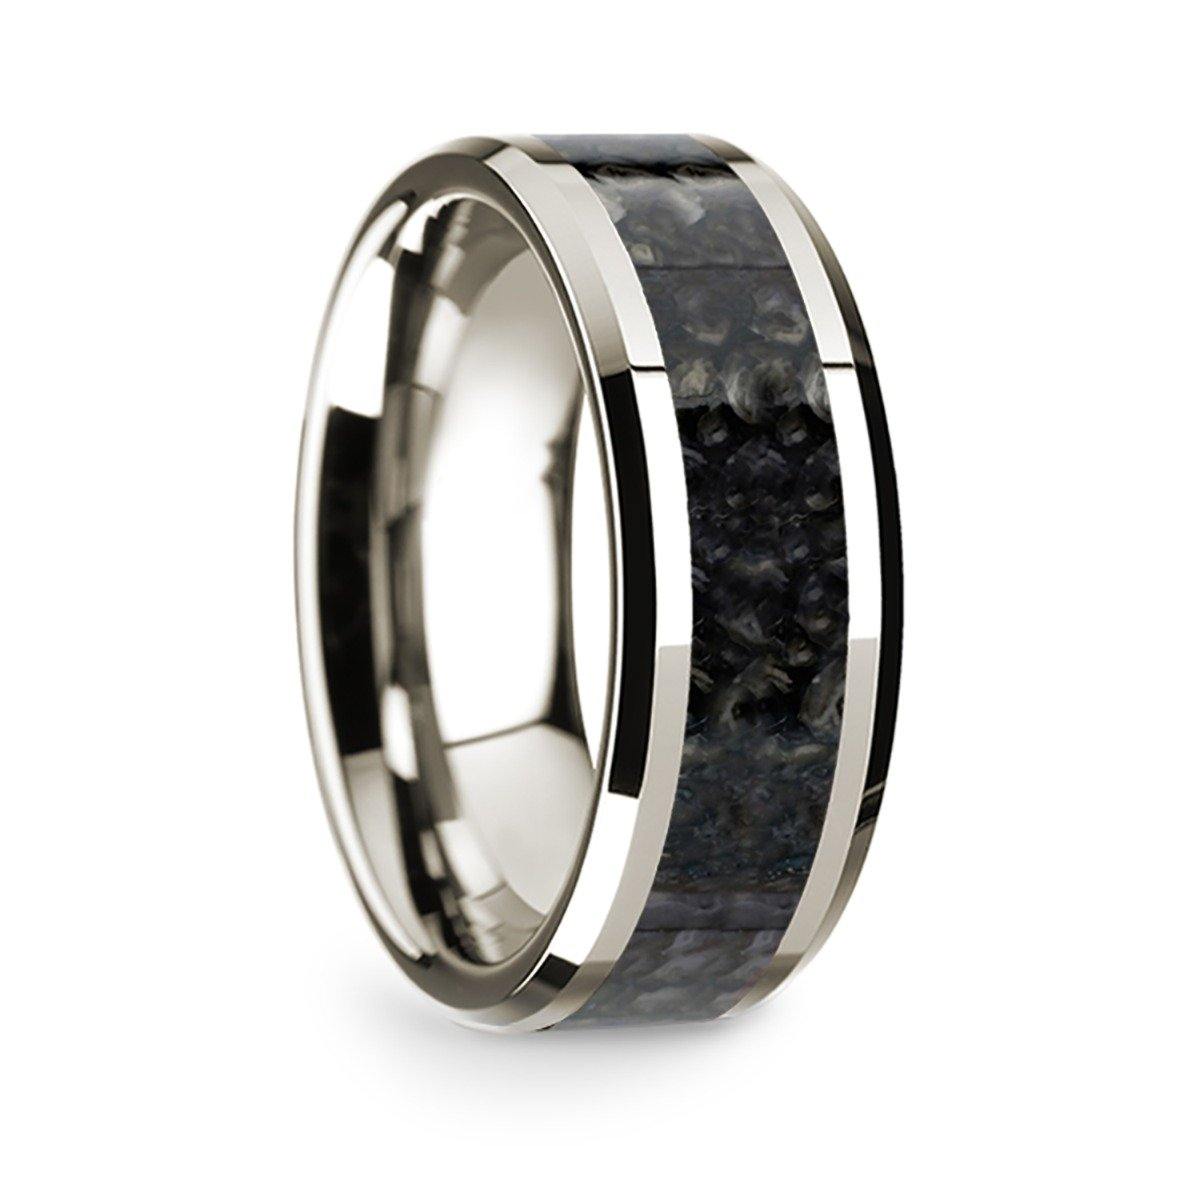 DEMETRIUS - 14k White Gold Polished Beveled Edges Wedding Ring with Blue Dinosaur Bone Inlay - 8 mm - The Rutile Ltd